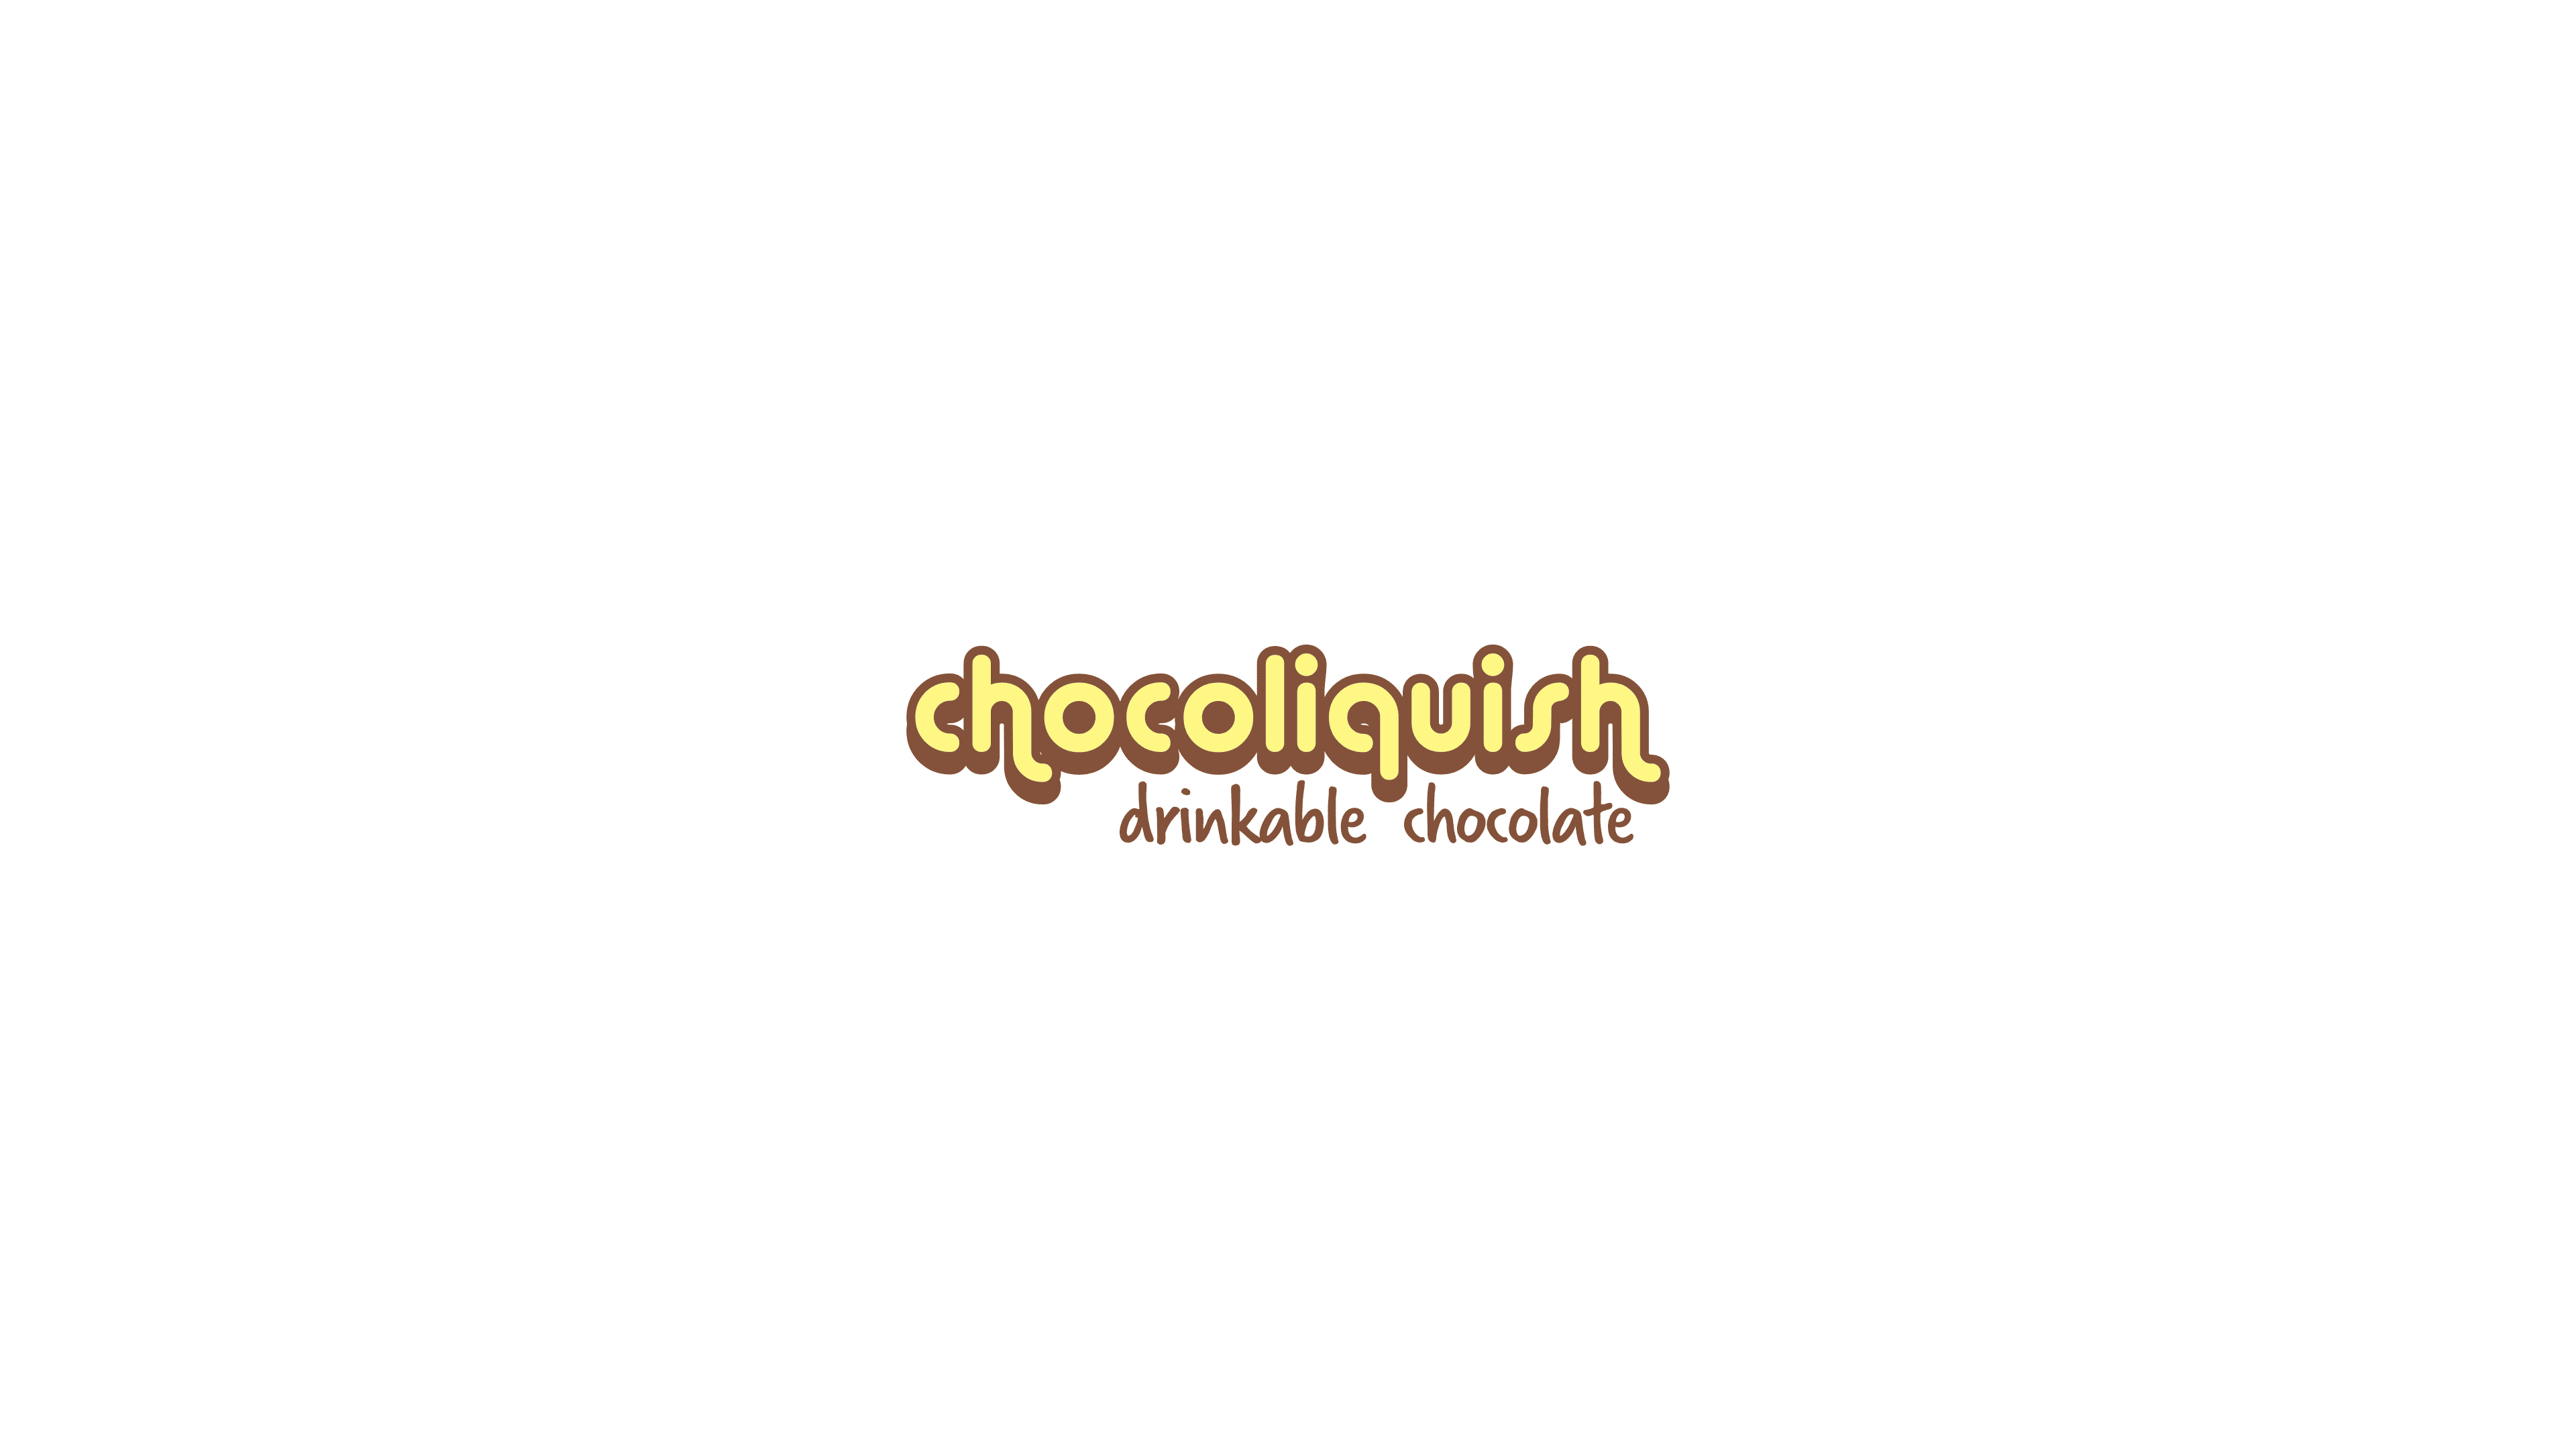 Chocoliquish logo.